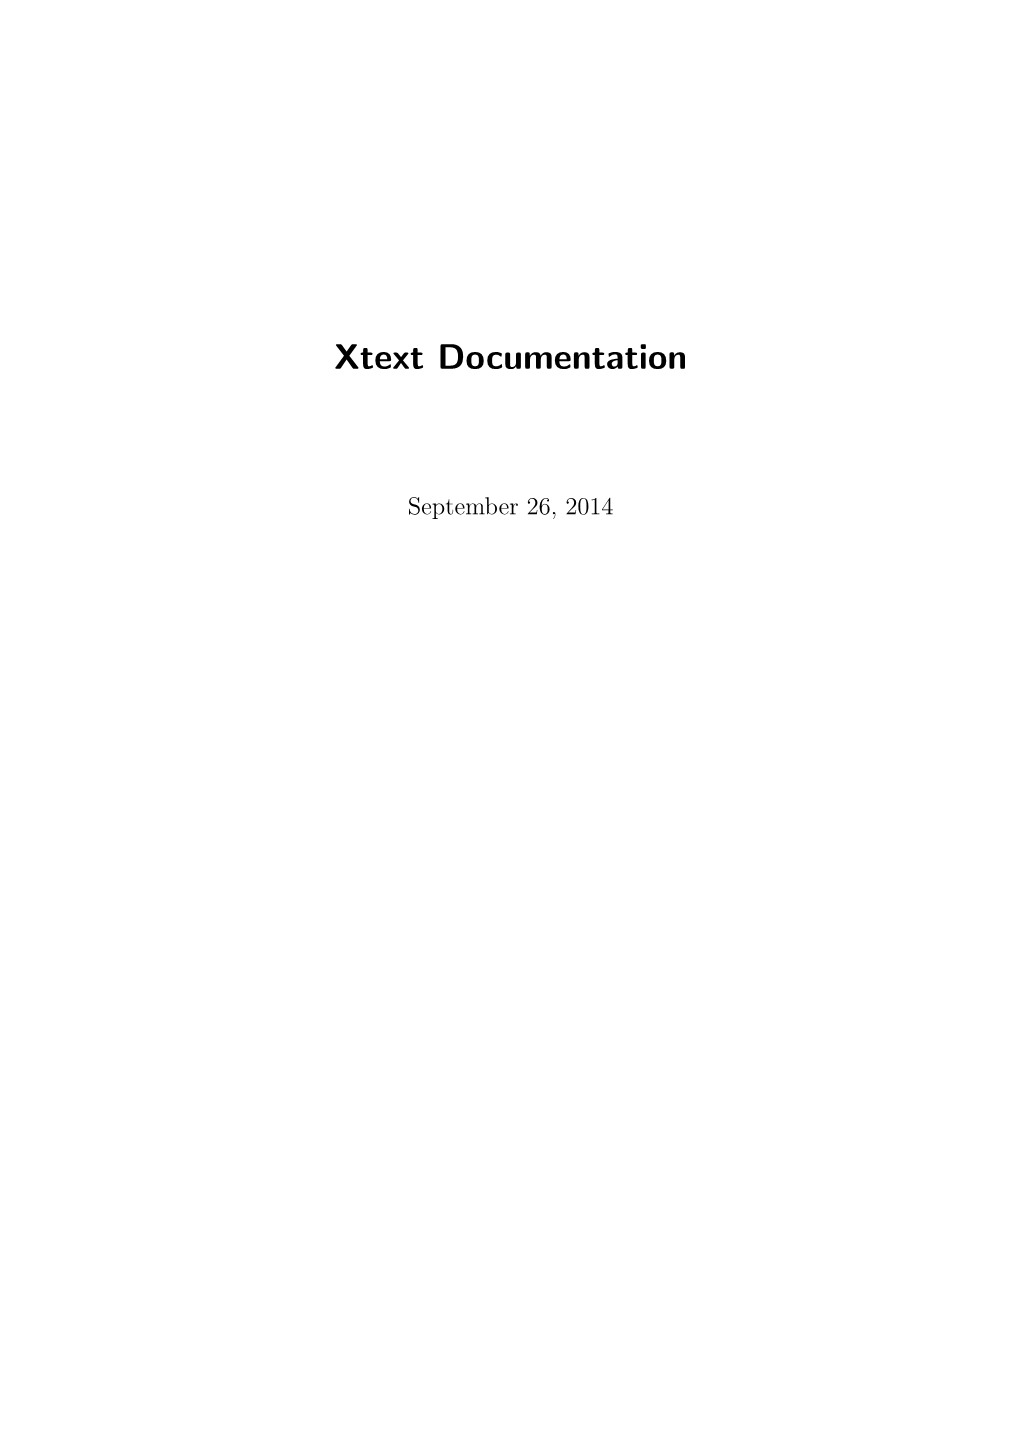 Xtext Documentation.Pdf